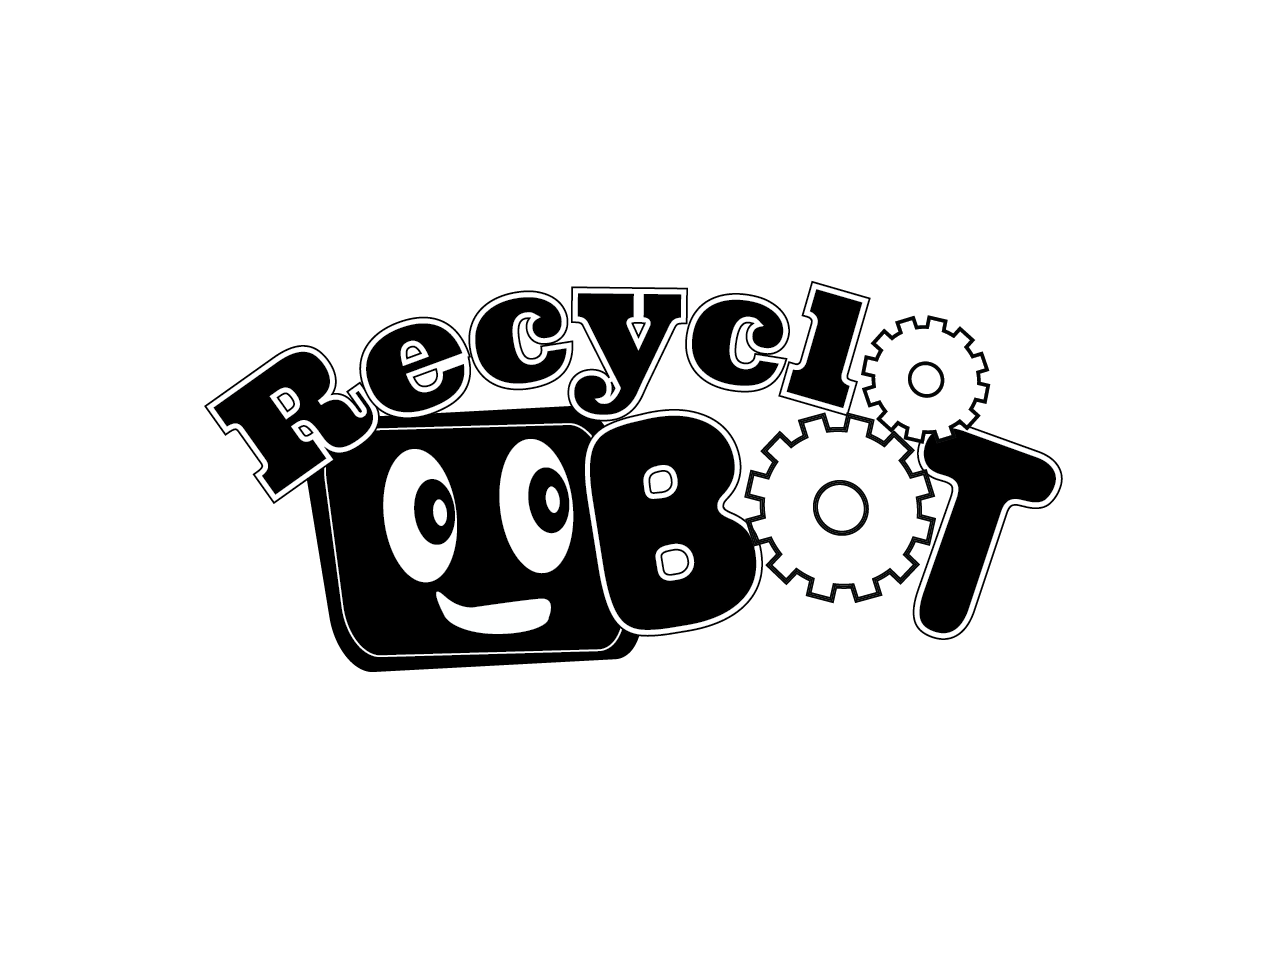 Recyclobot Logo Black and White Version